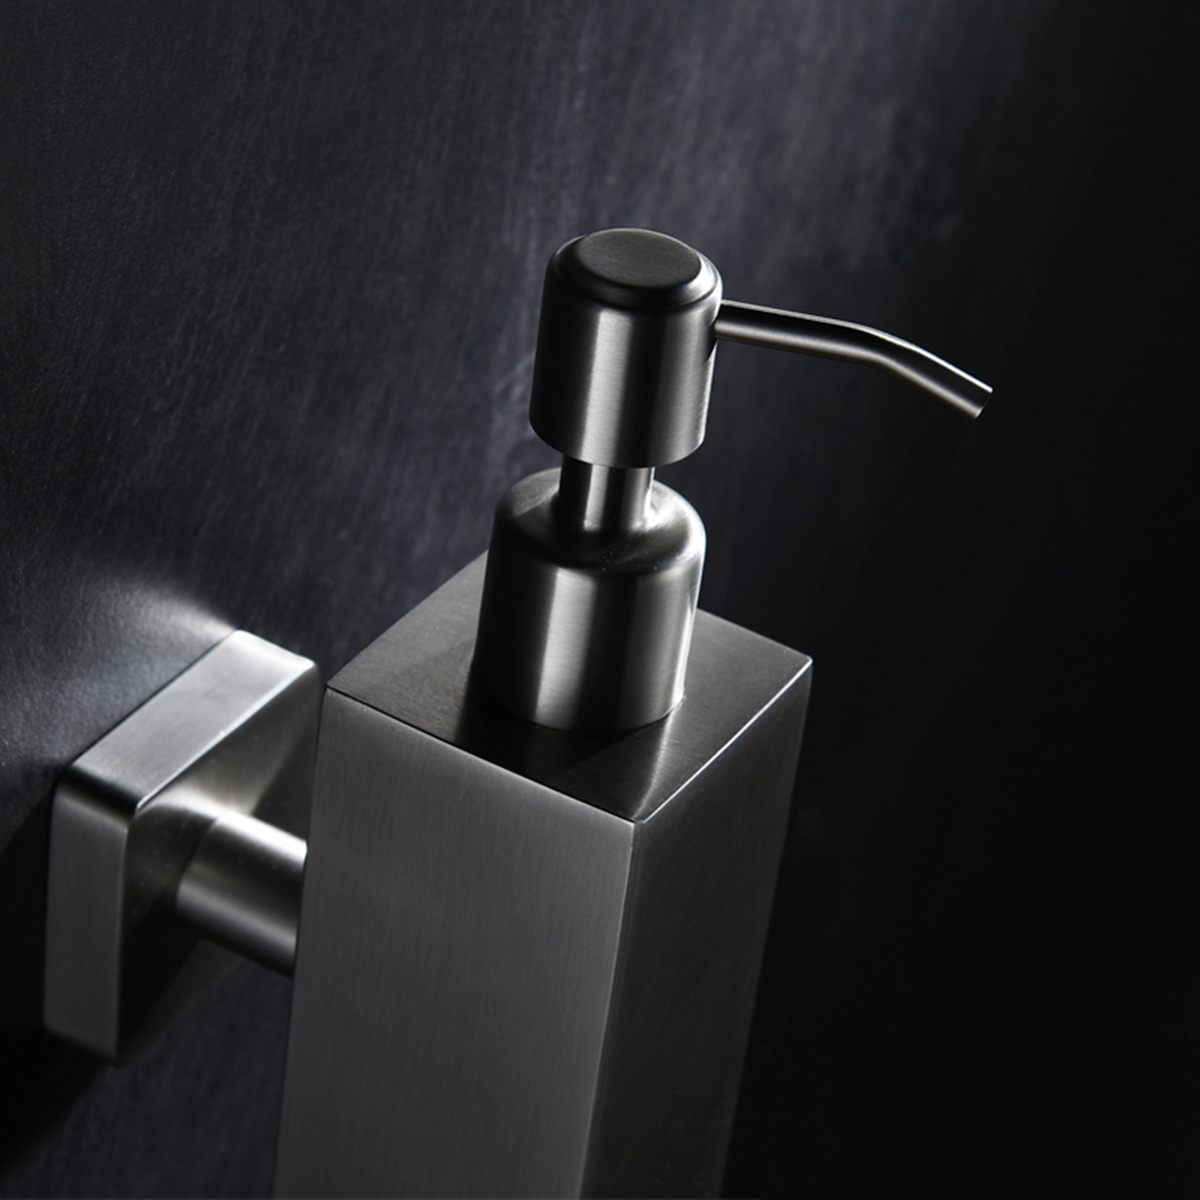 Stainless-Steel-Hand-Soap-Dispenser-Liquid-Bottle-Holder-Wall-Mounted-Bathroom-Storage-1427272-6